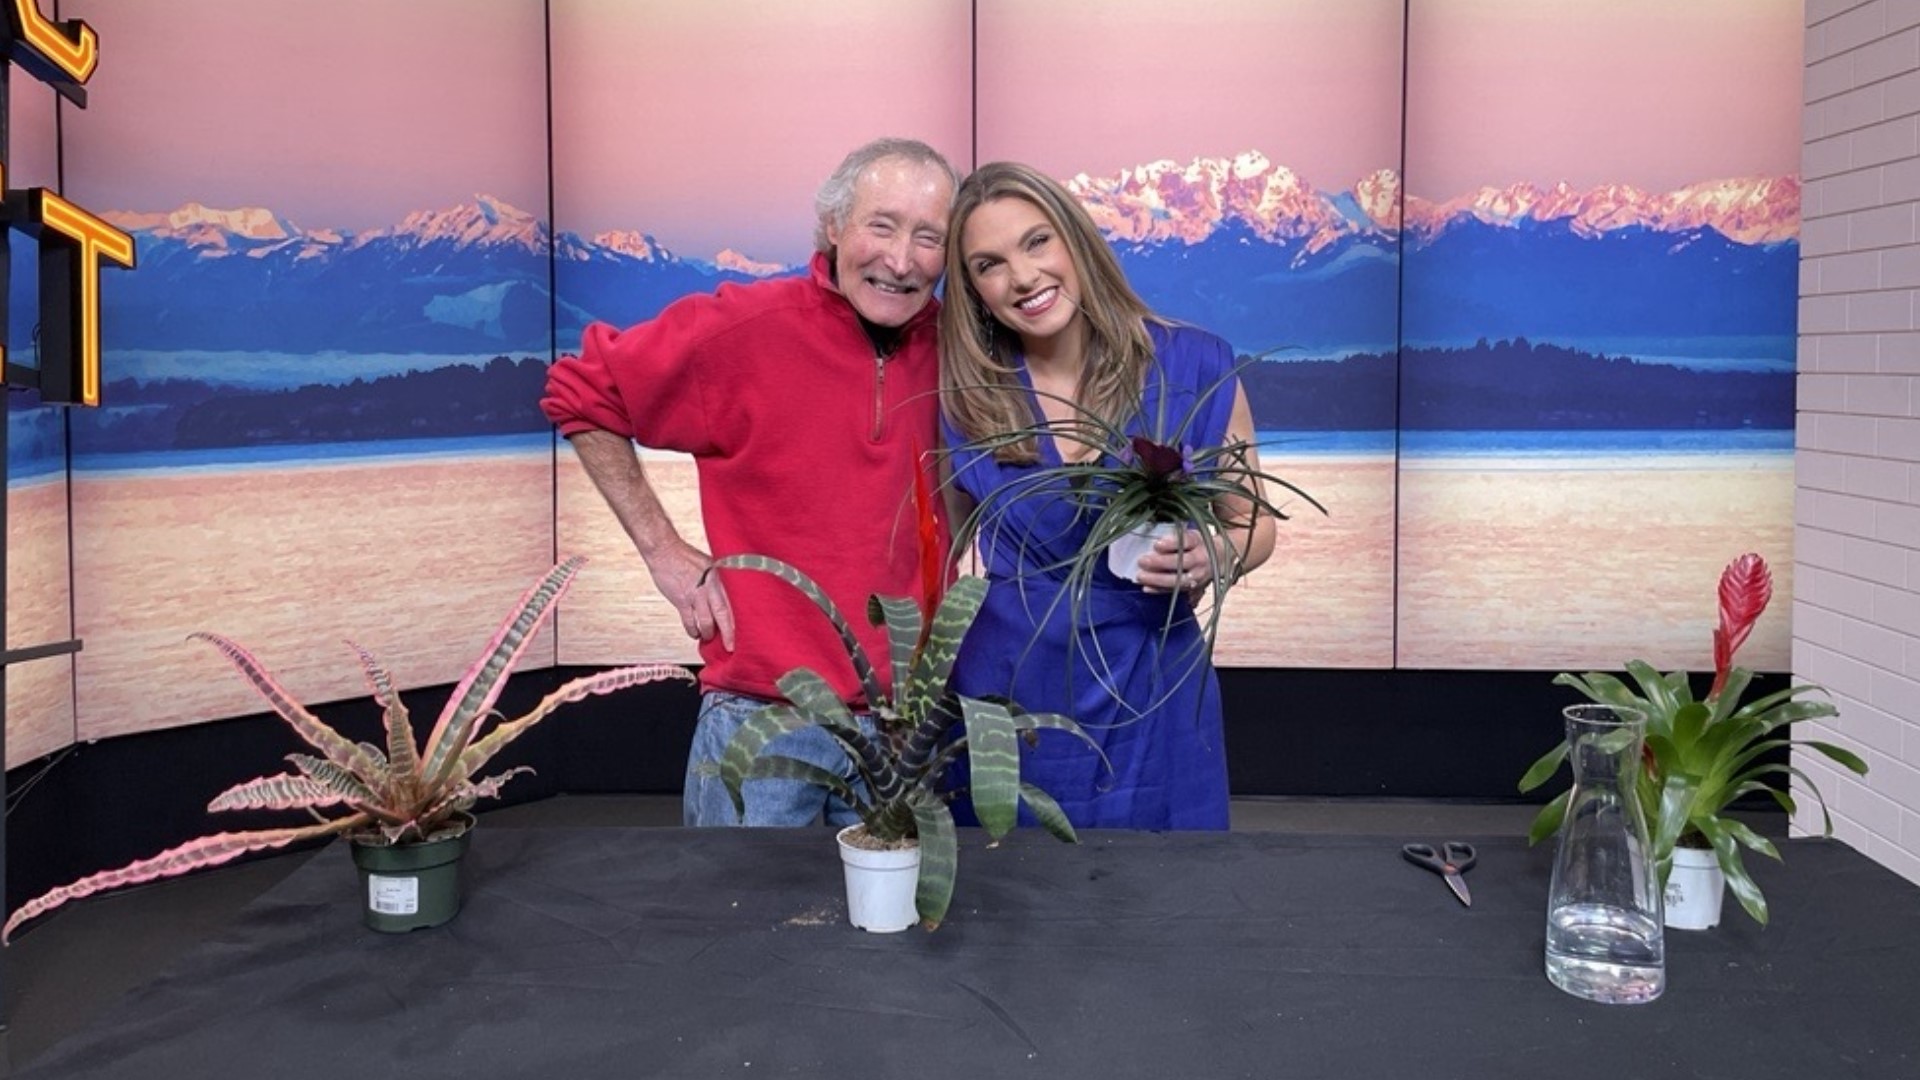 Master gardener Ciscoe Morris says the bromeliad makes a wonderful holiday gift. #newdaynw